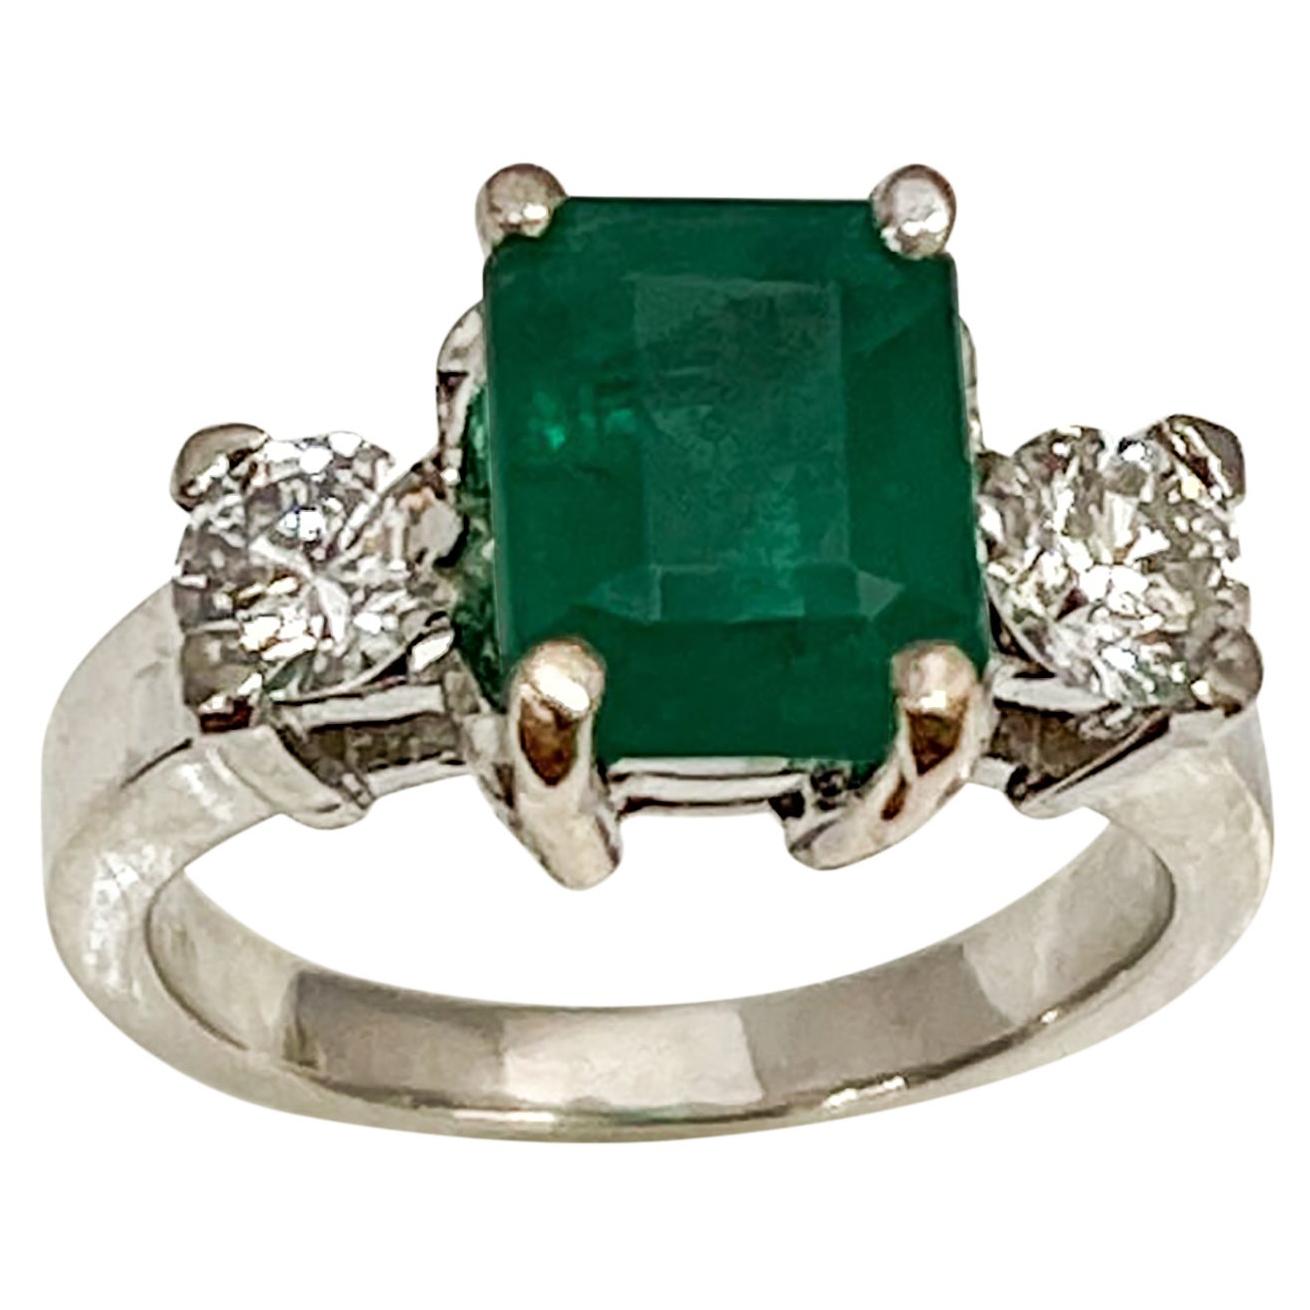 2.5 Carat Natural Emerald Cut Emerald & 0.50 Ct Diamond Ring 14 Karat White Gold